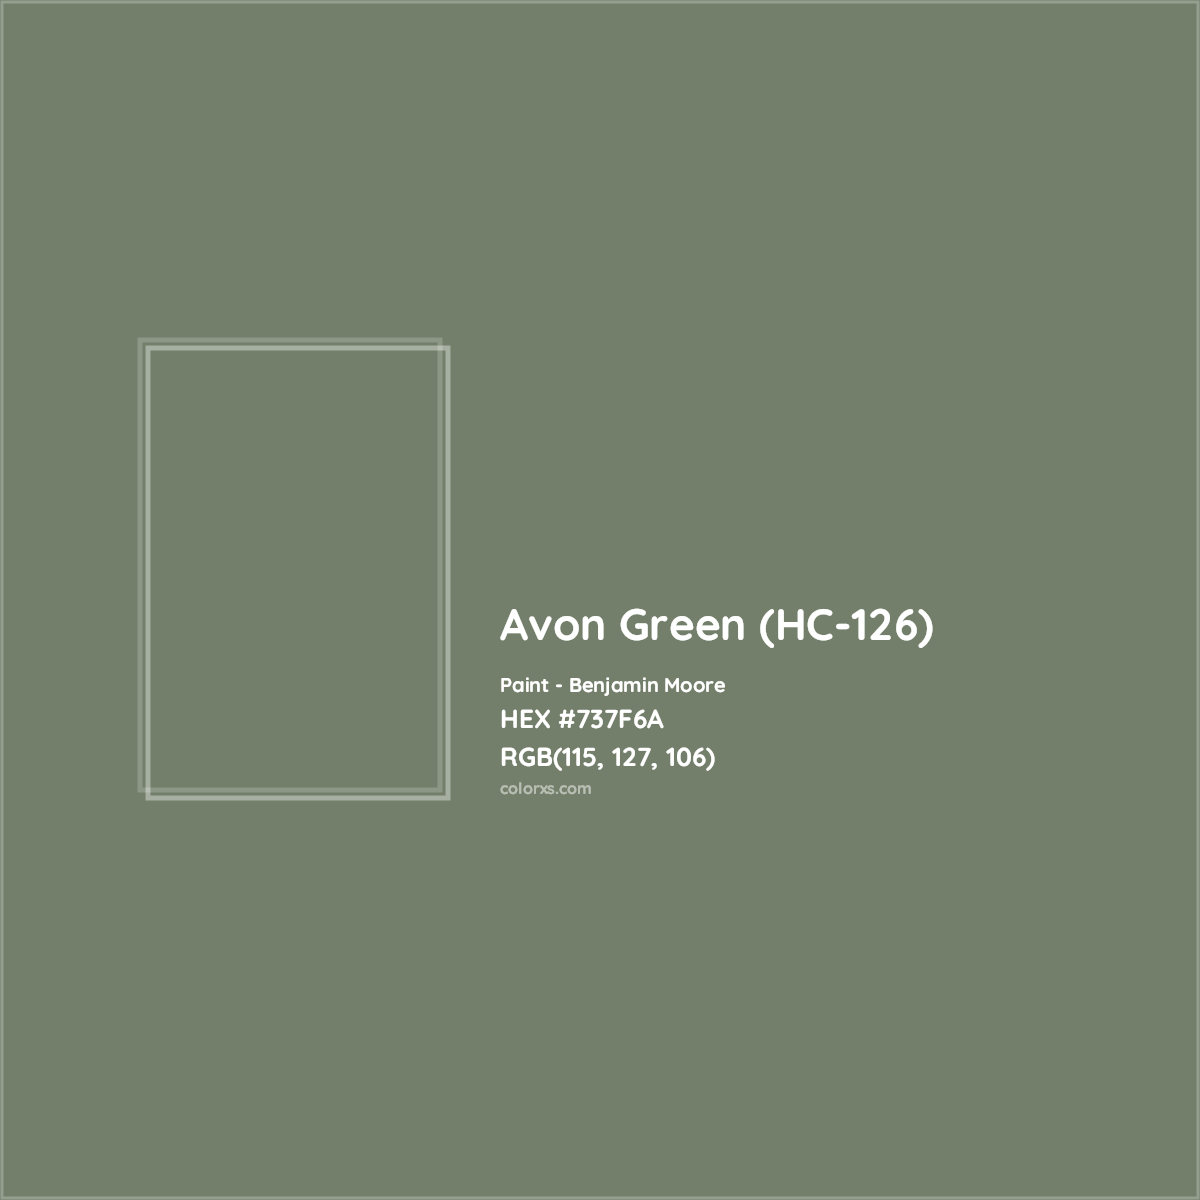 HEX #737F6A Avon Green (HC-126) Paint Benjamin Moore - Color Code